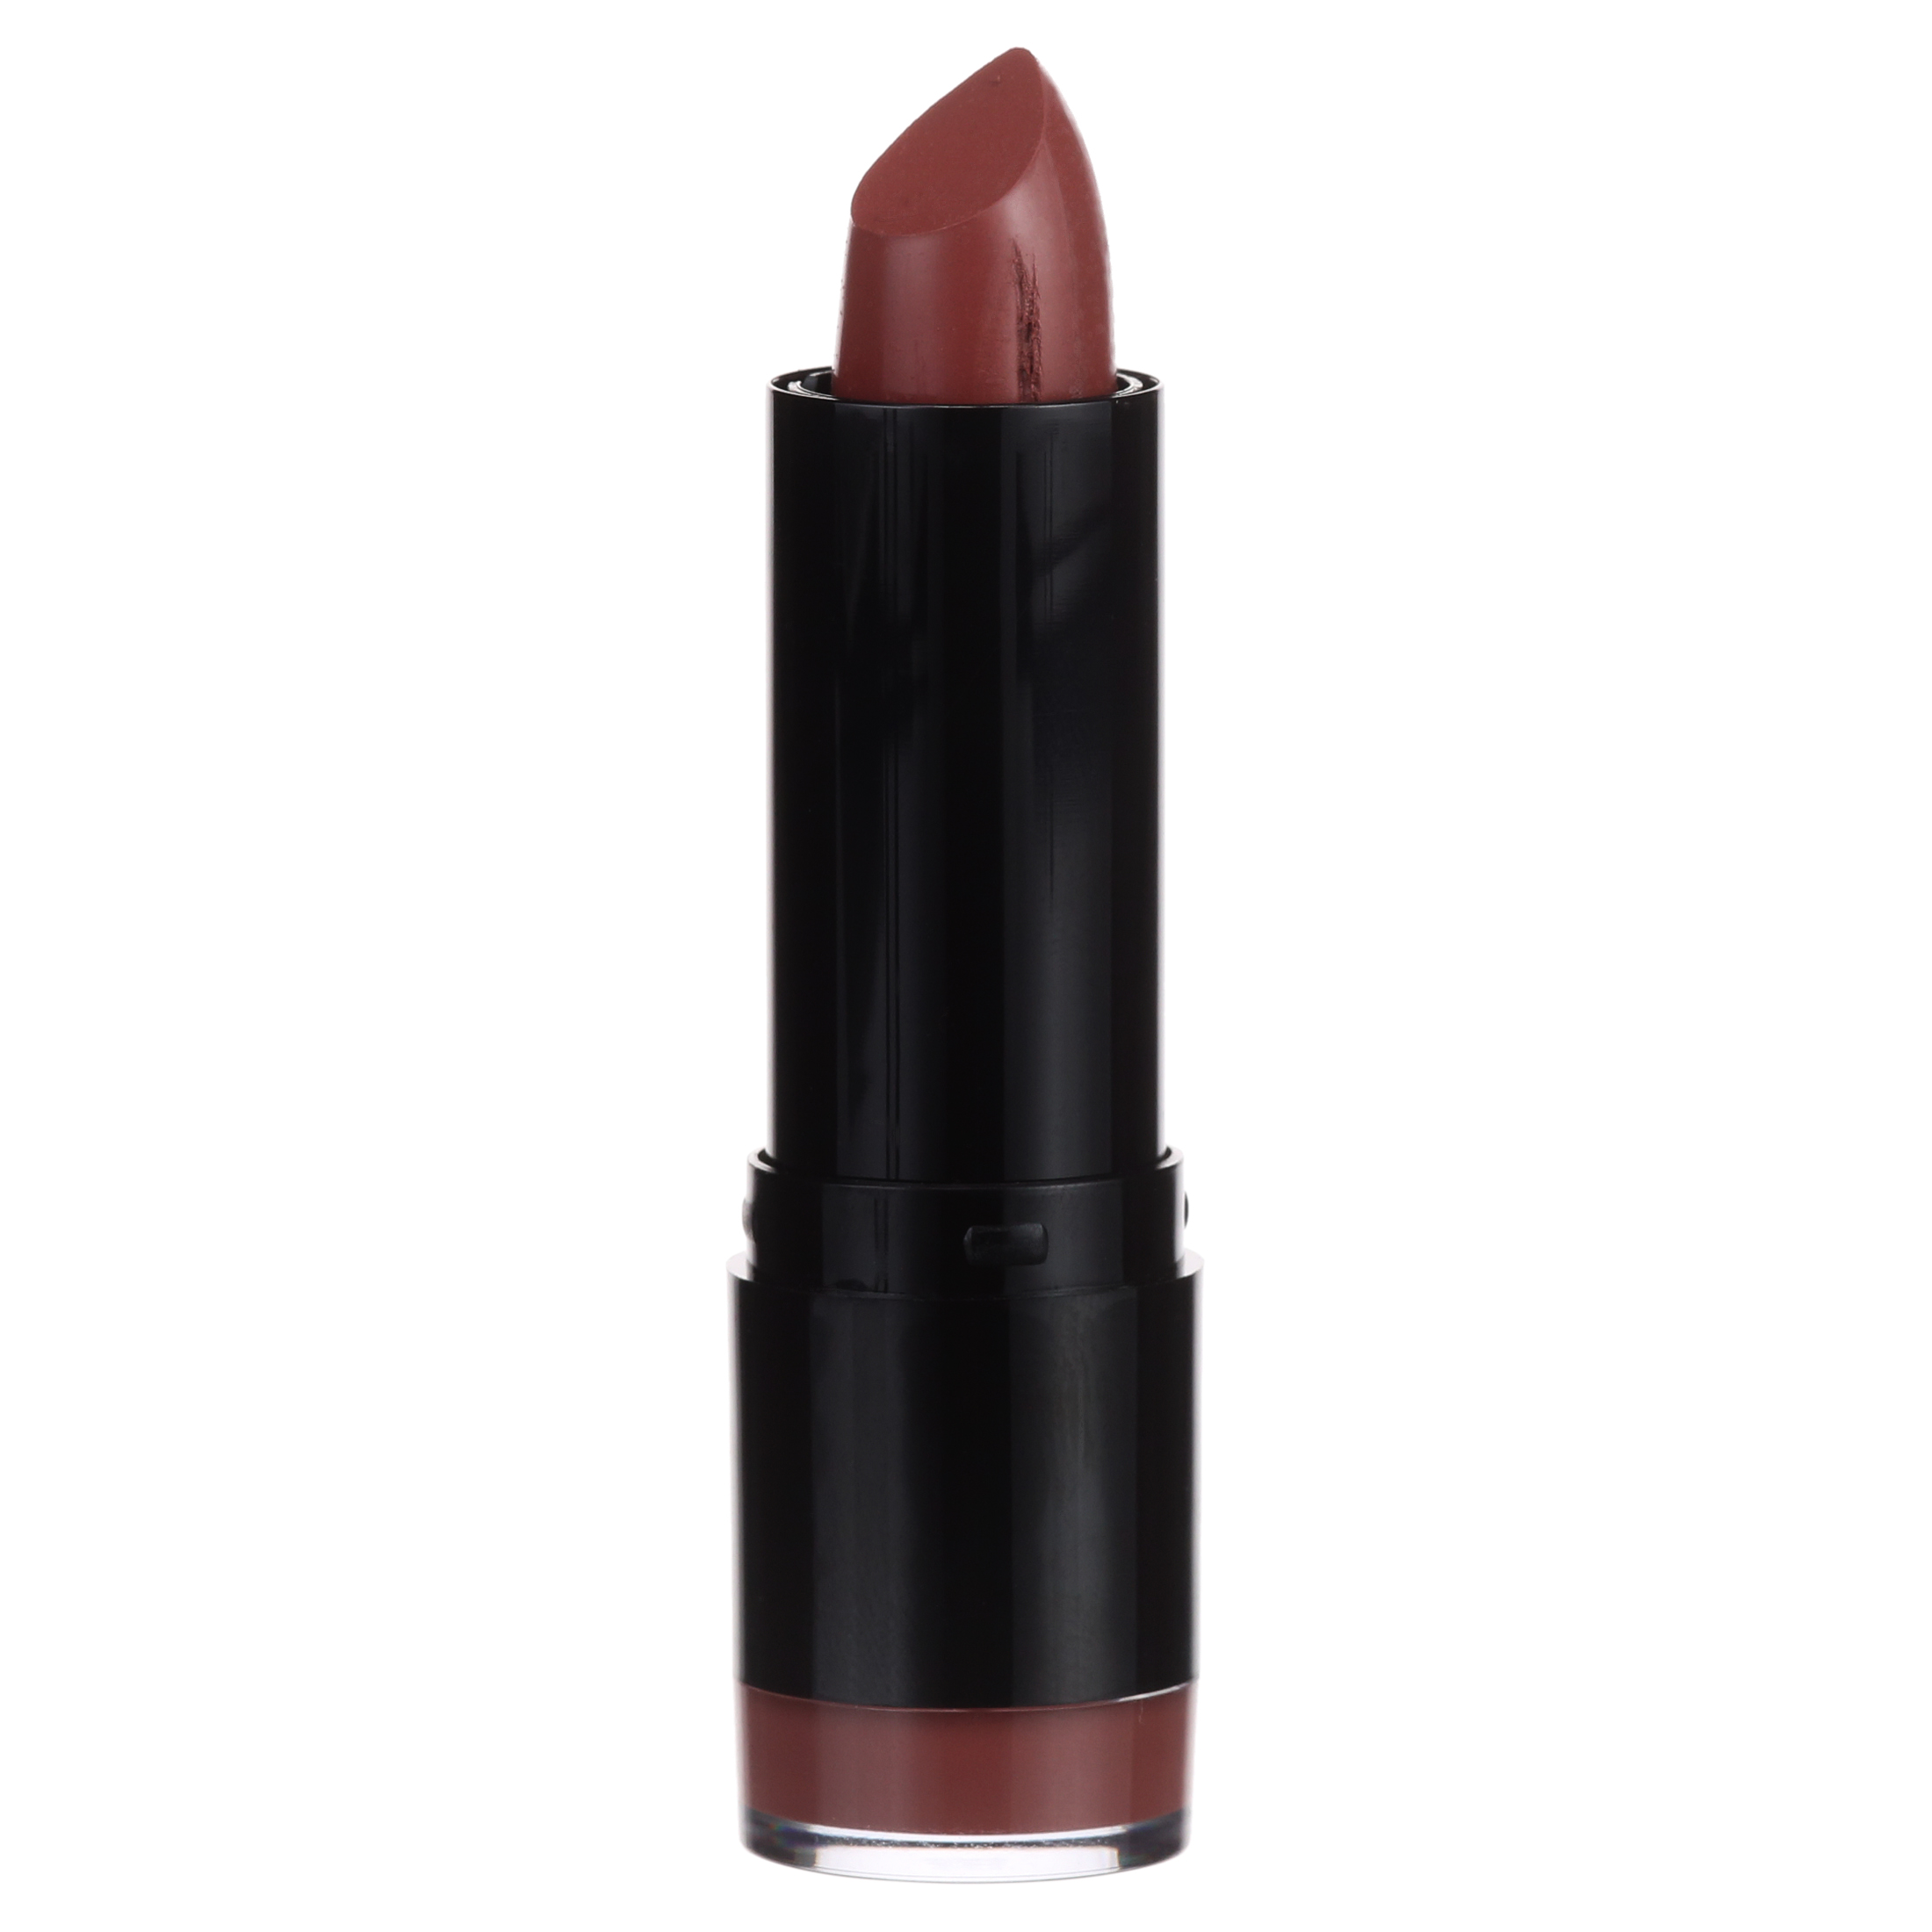 NYX Professional Makeup Extra Creamy Round Lipstick, Cocoa - image 4 of 9